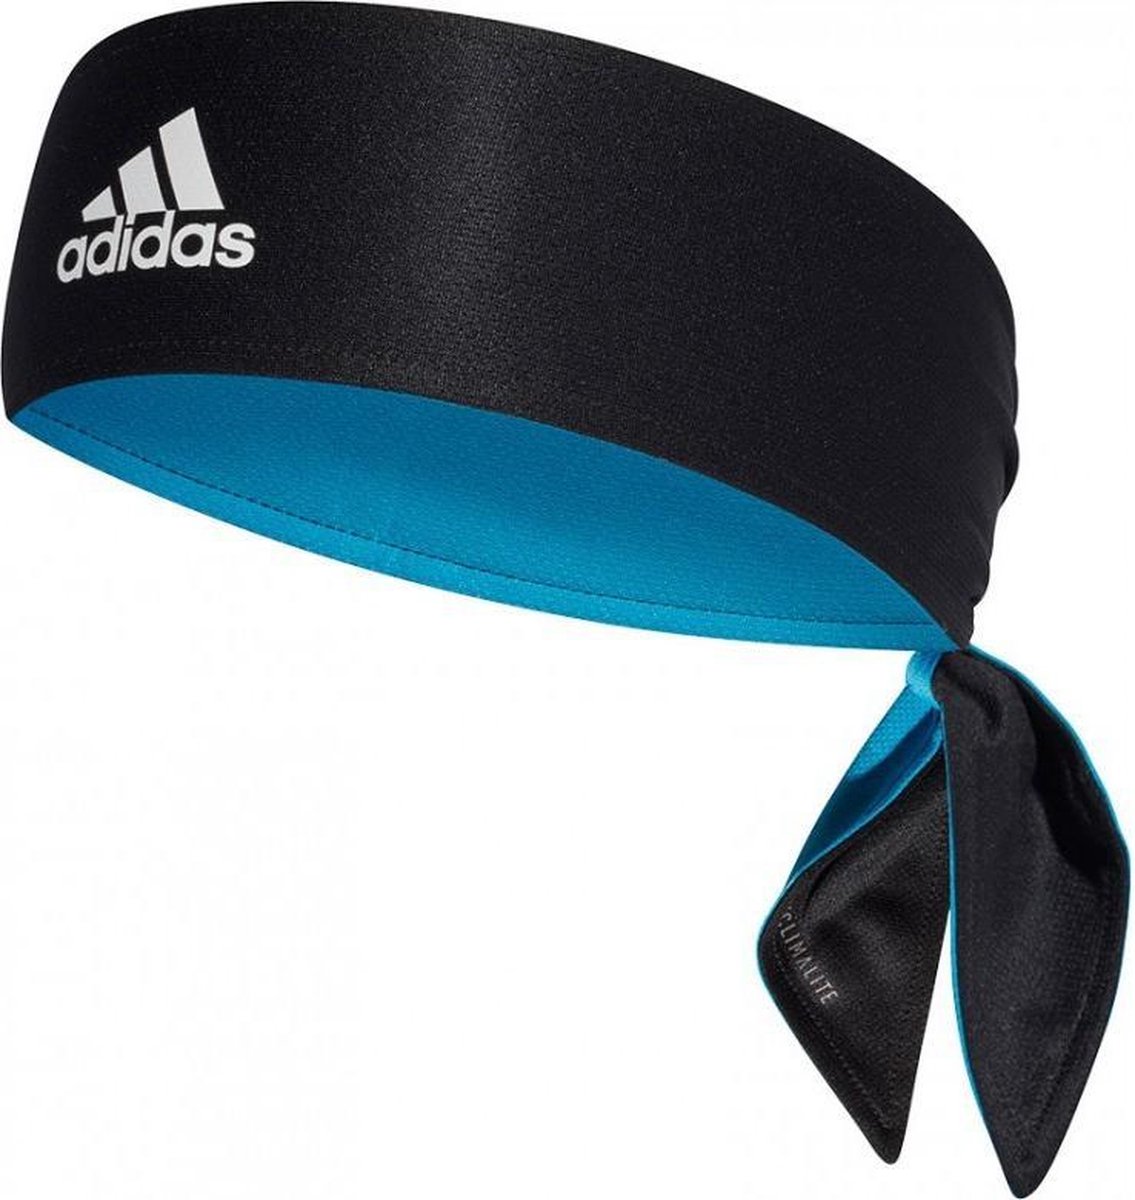 adidas Reversible hoofdband zwart/blauw bol.com